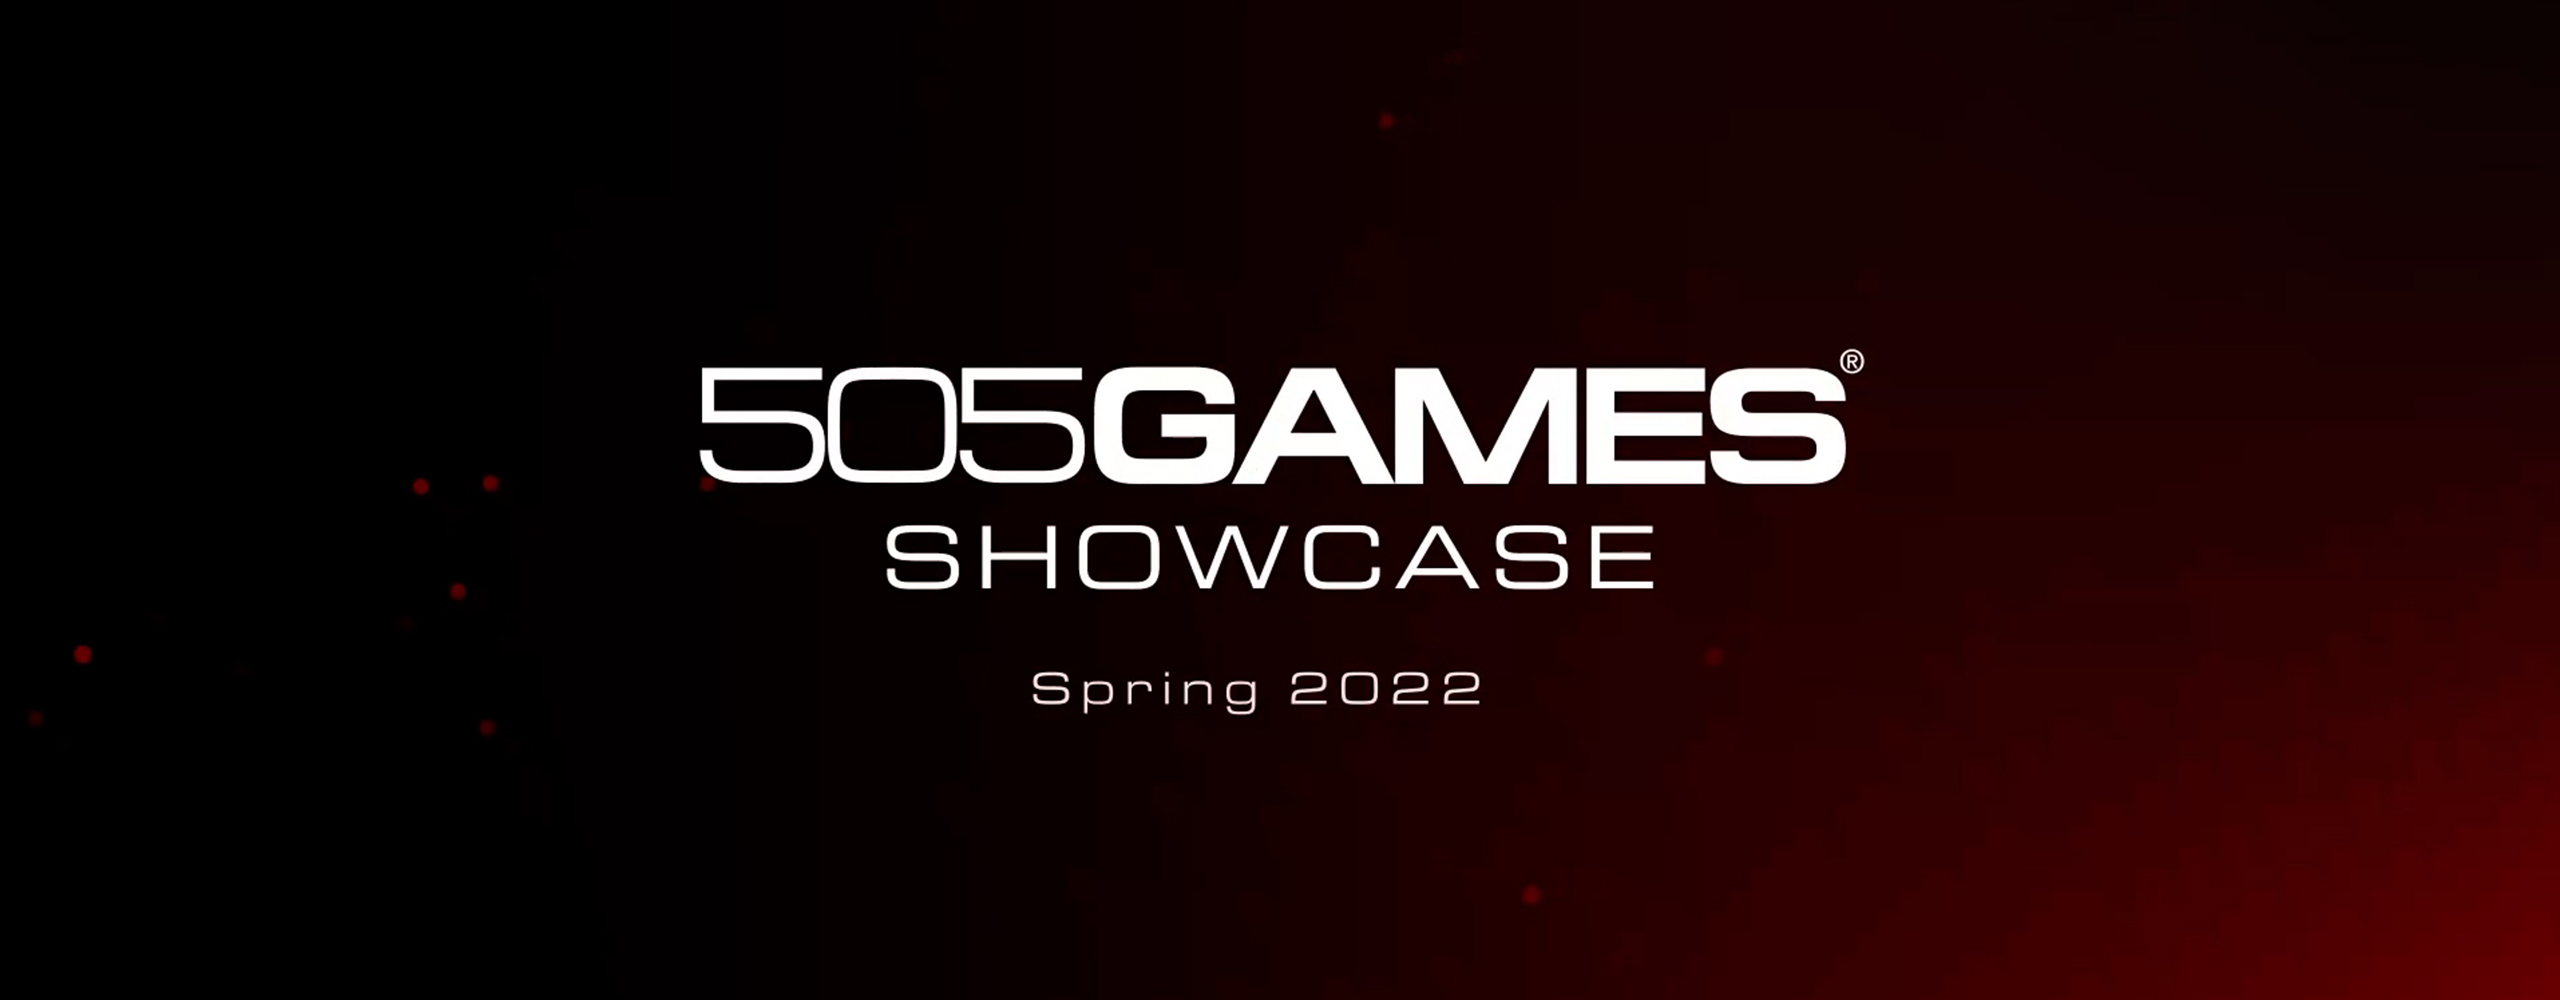 505 Games Spring 2022 Showcase